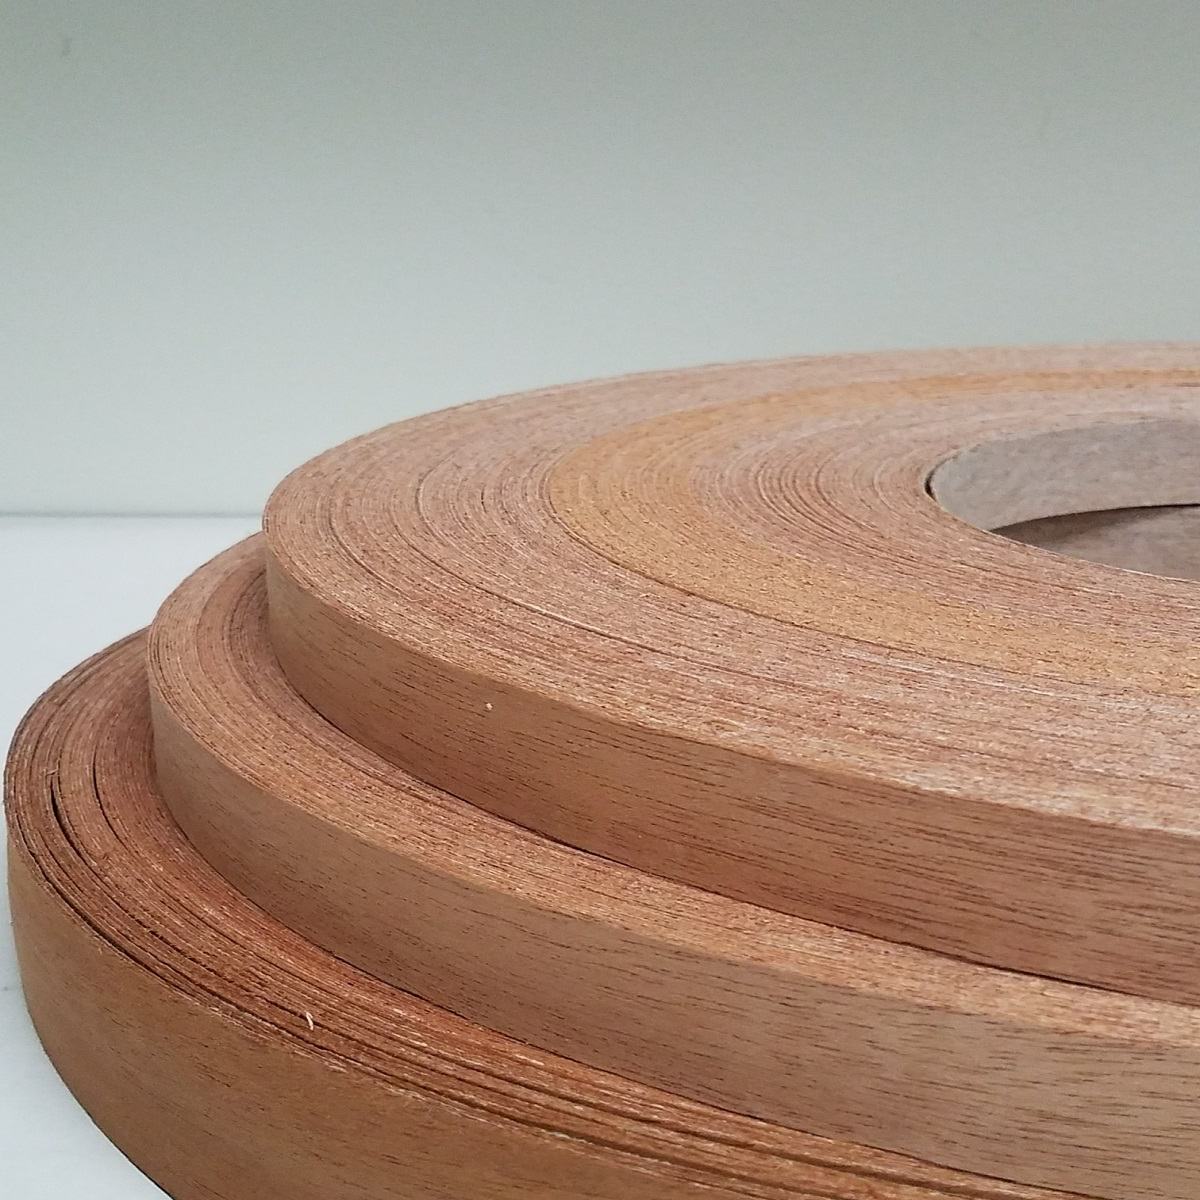 Details about   Sapele non glued 3/4"x500' wood Veneer edgebanding 